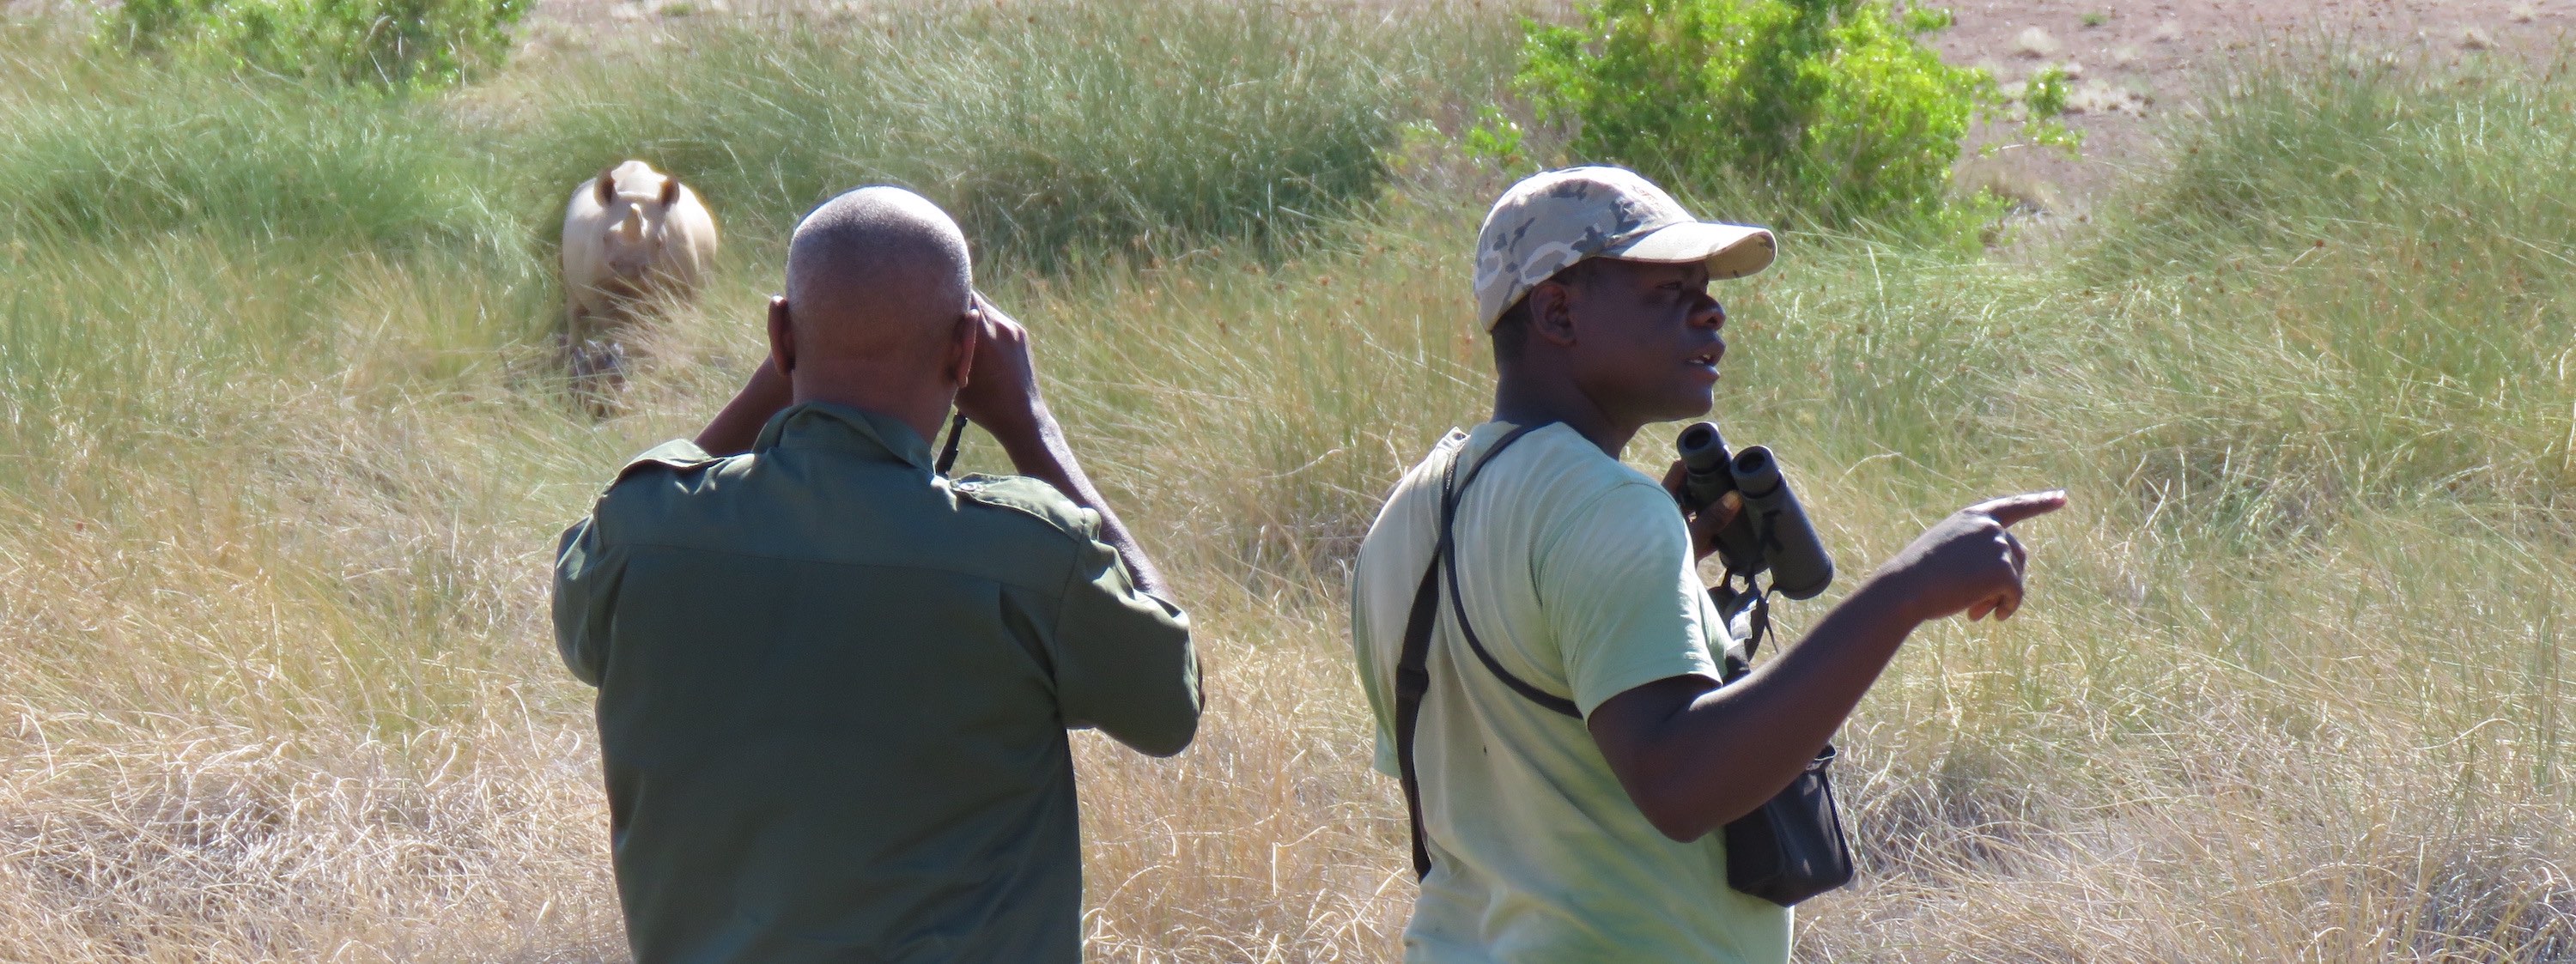 Two rangers tracking a black rhino in the bush.